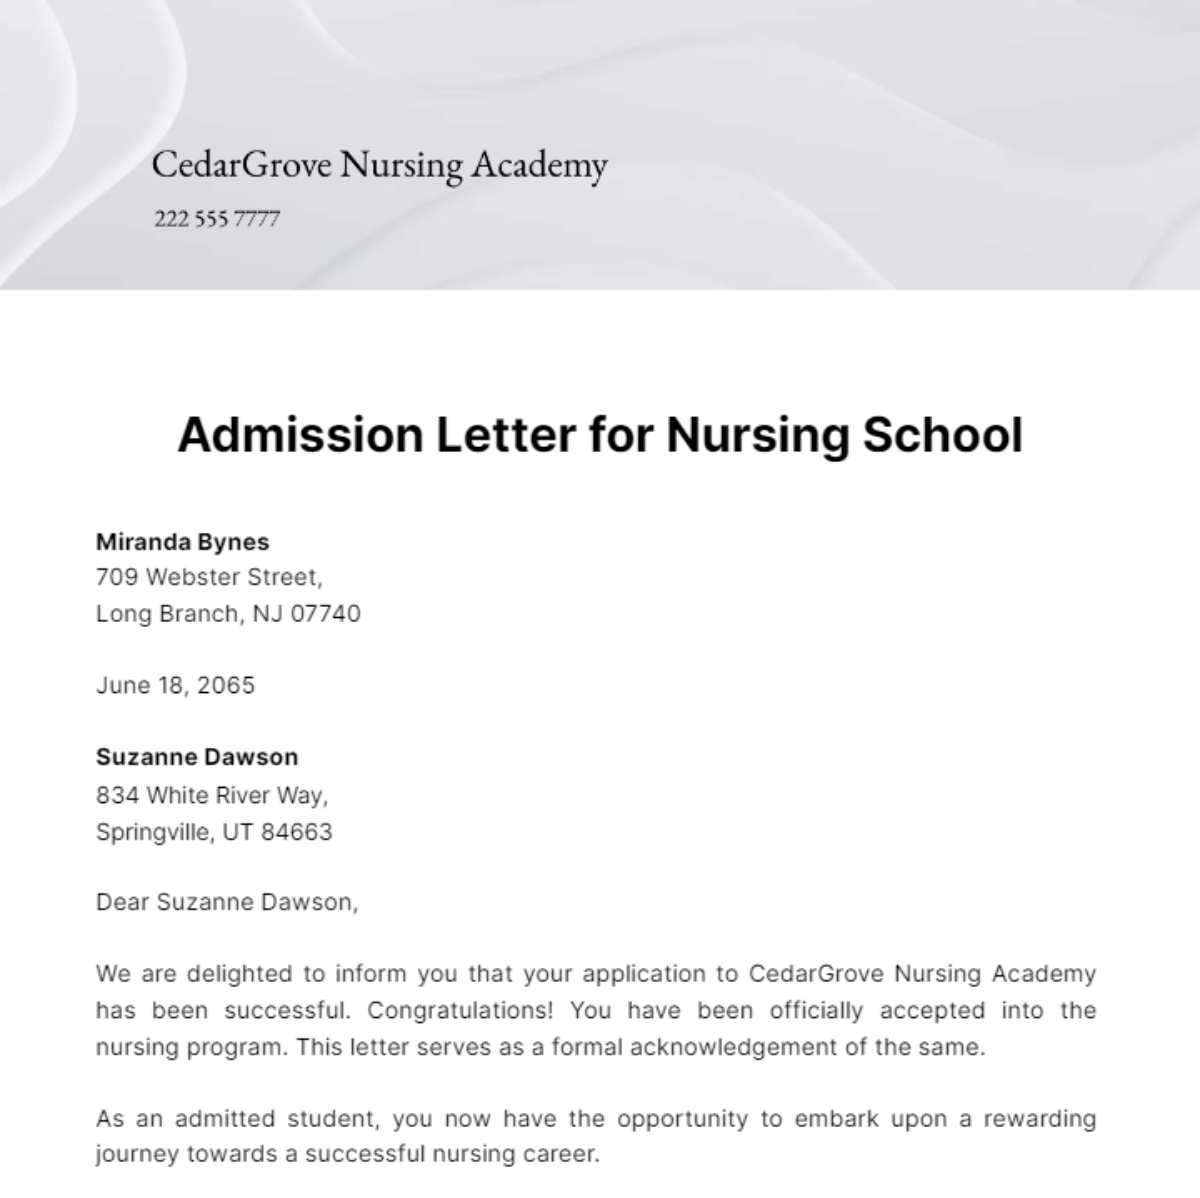 Admission Letter for Nursing School Template